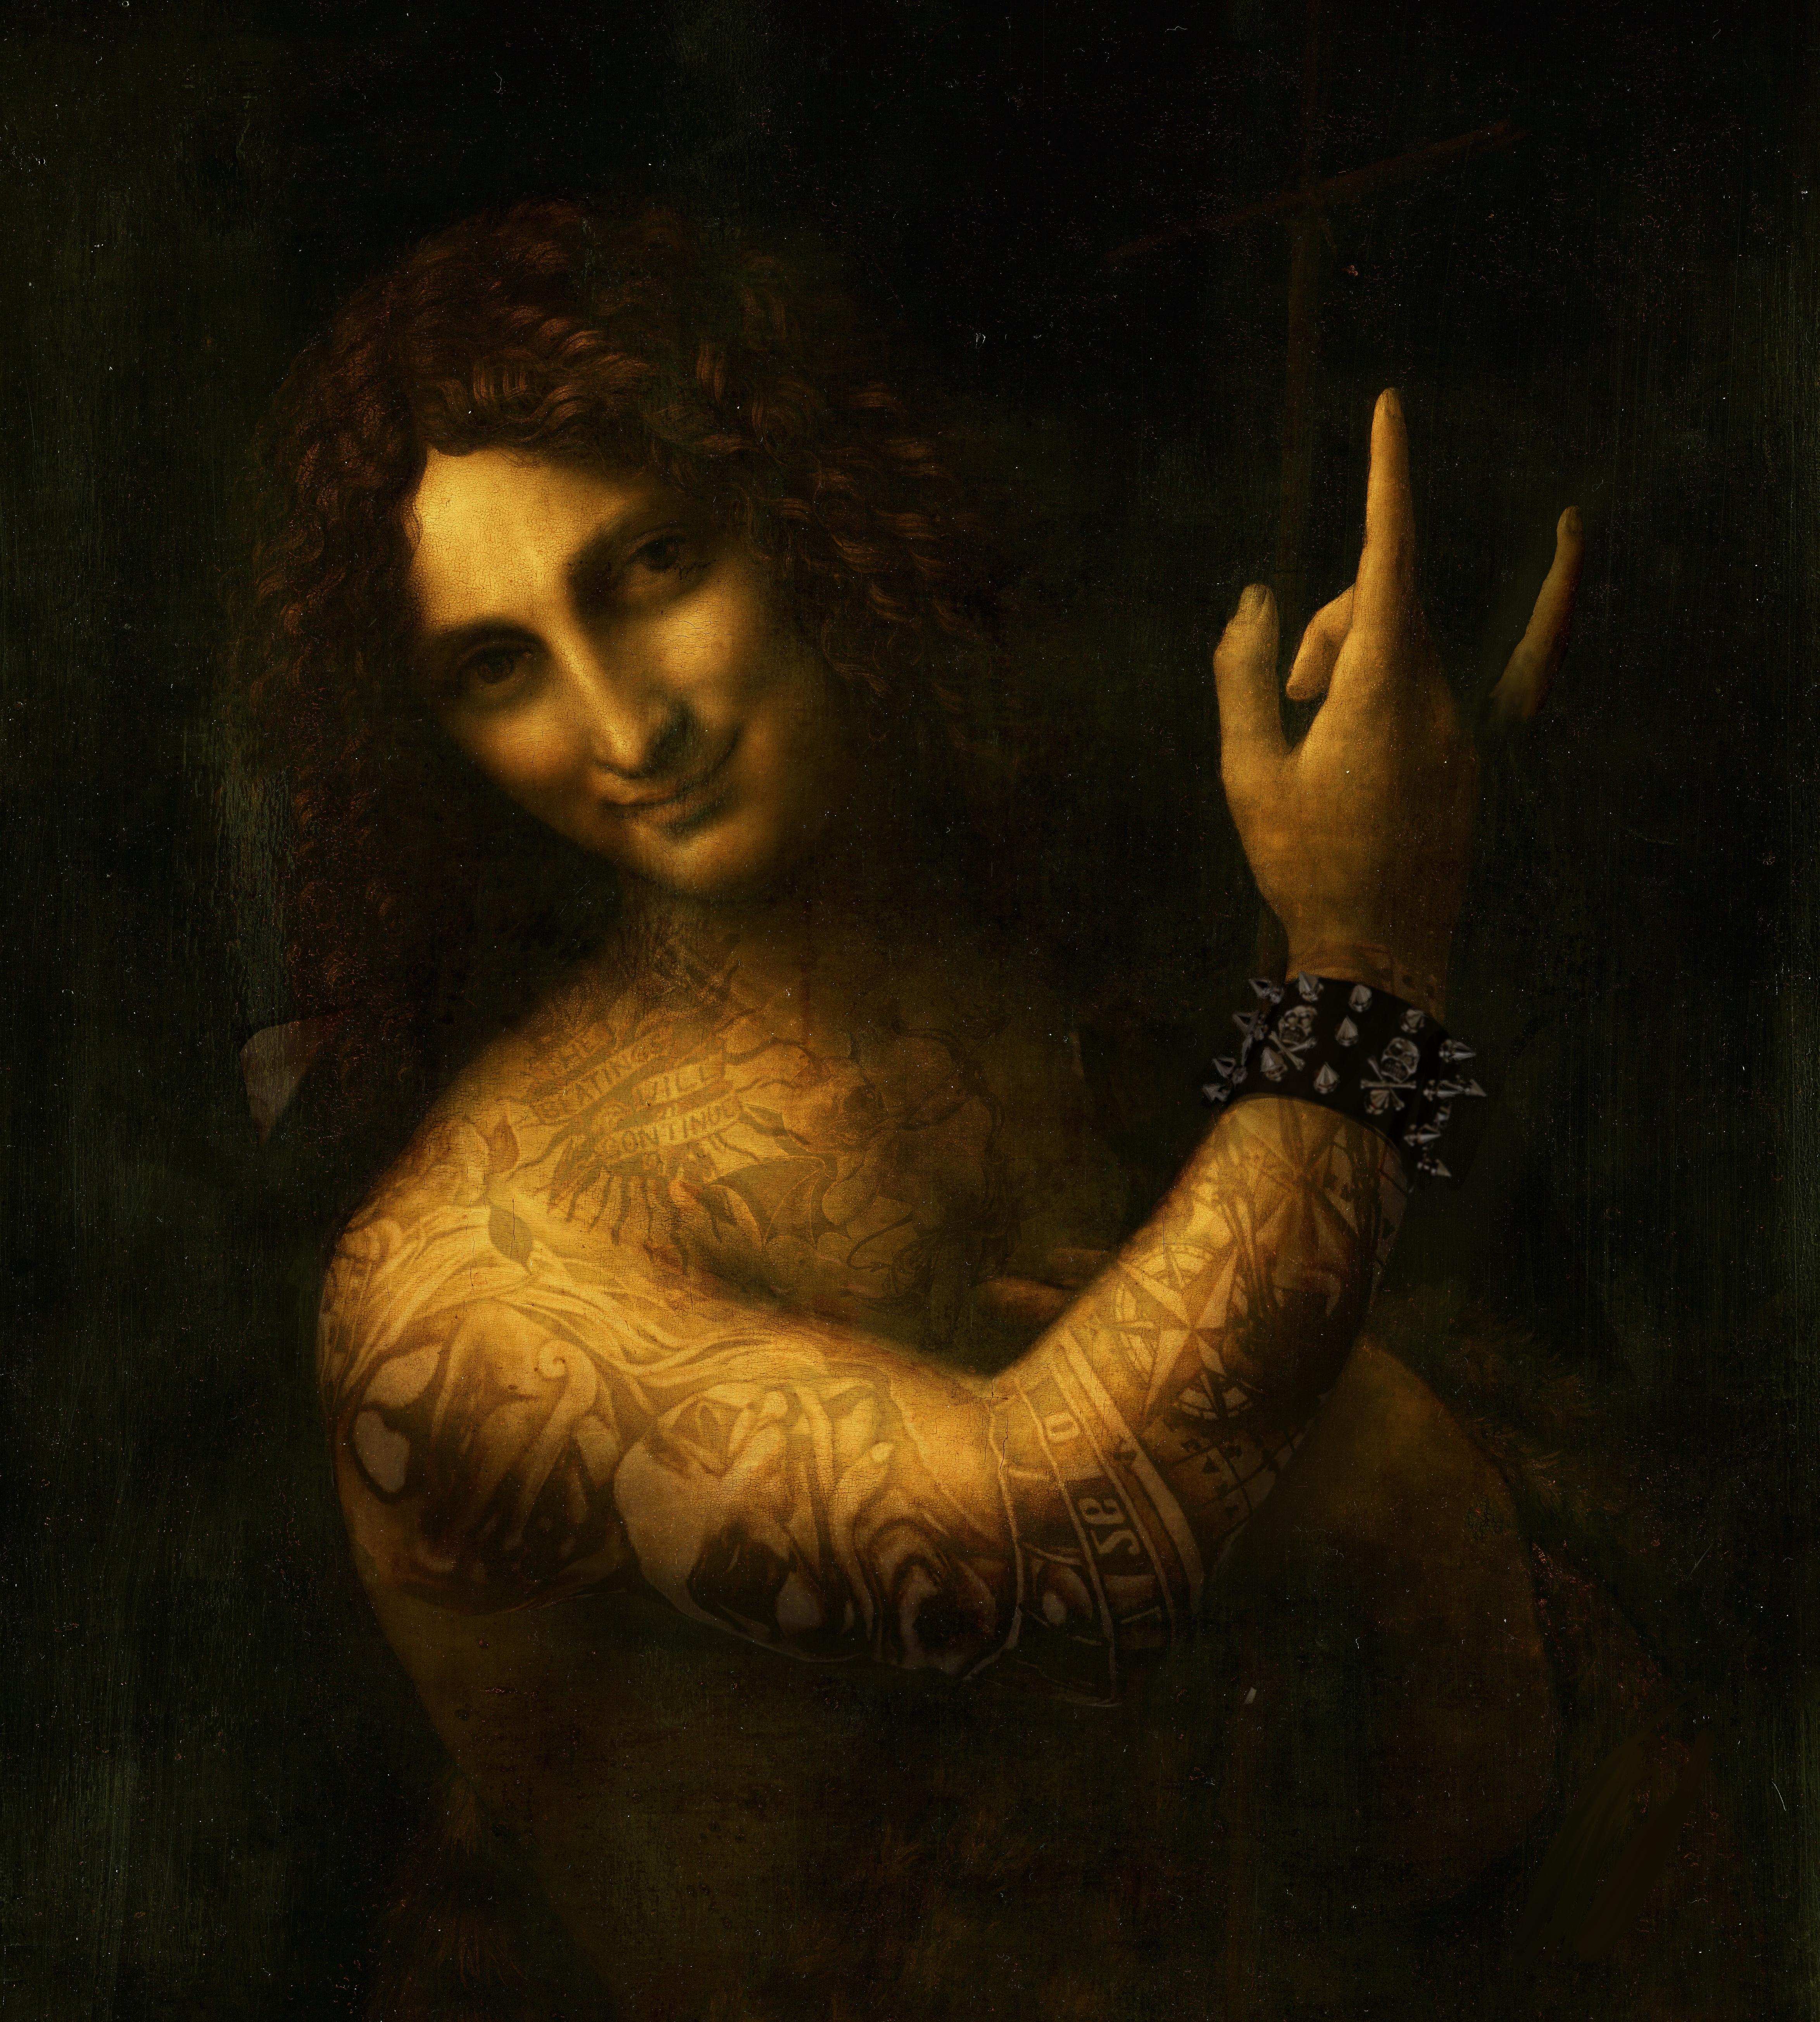 Pablo de Pinini Figurative Print - Rock Star. Based on the portrait of Saint John the Baptist by Leonardo da Vinci